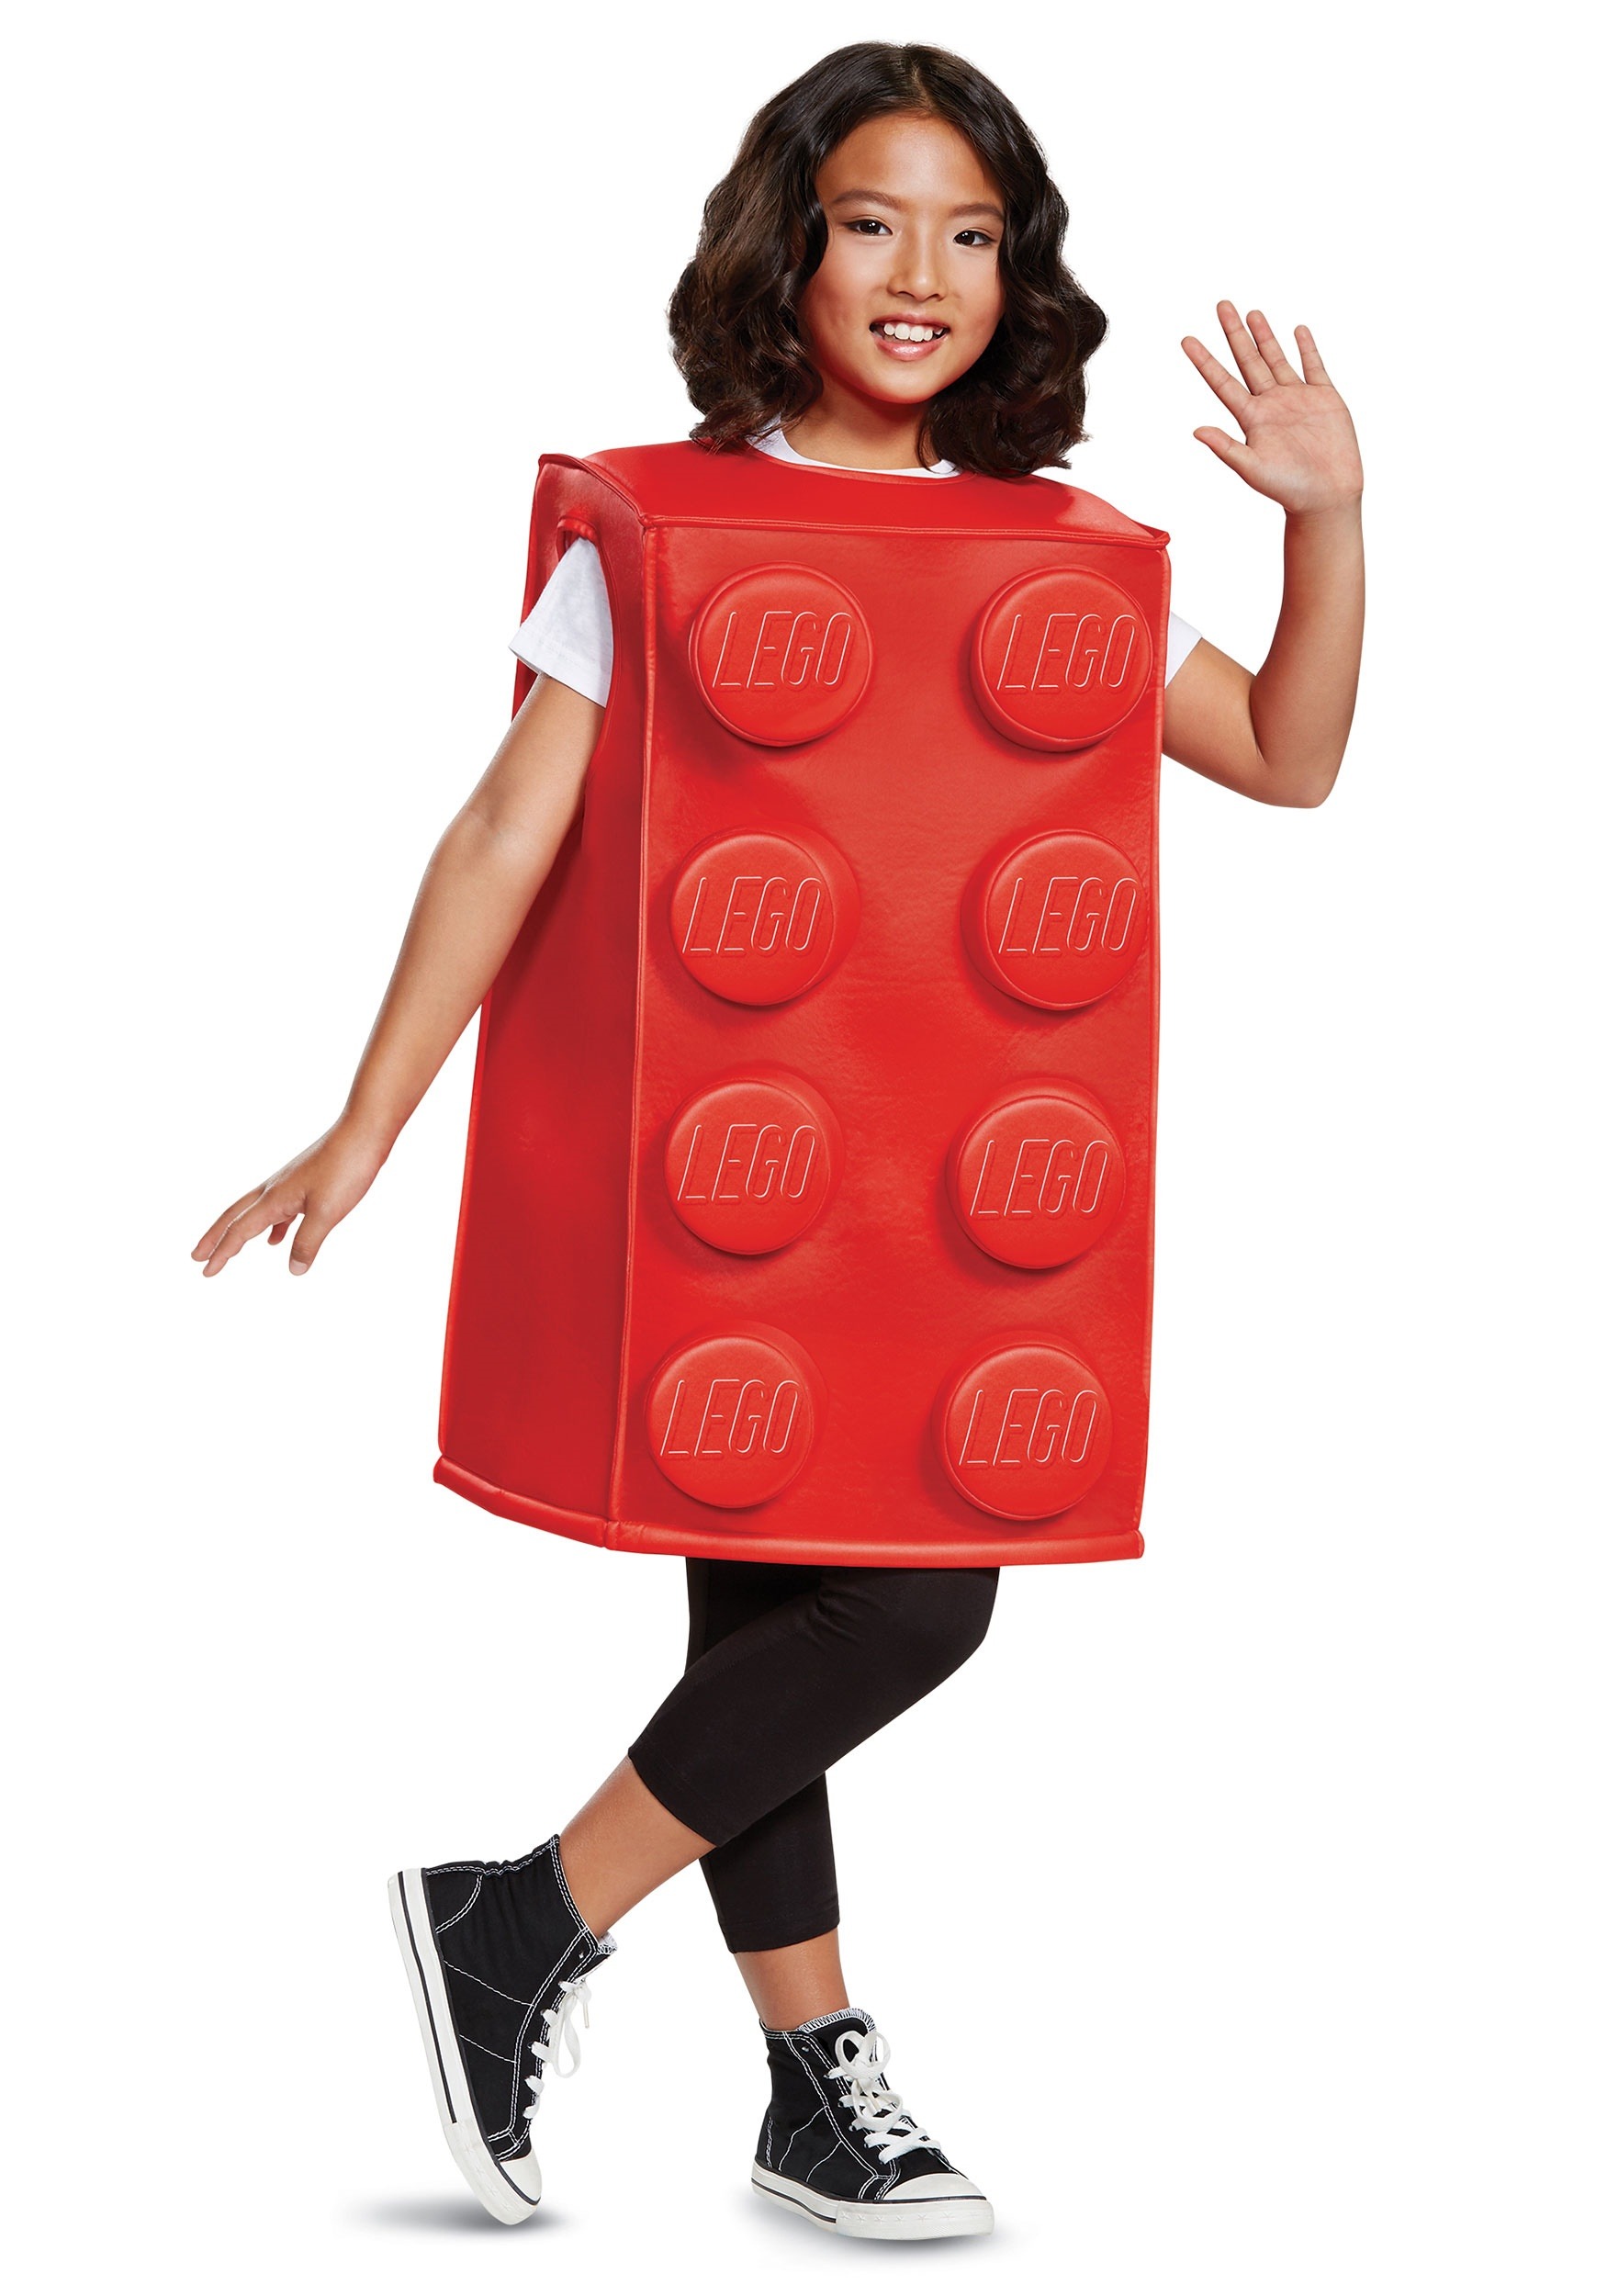 Lego Child Red Brick Costume